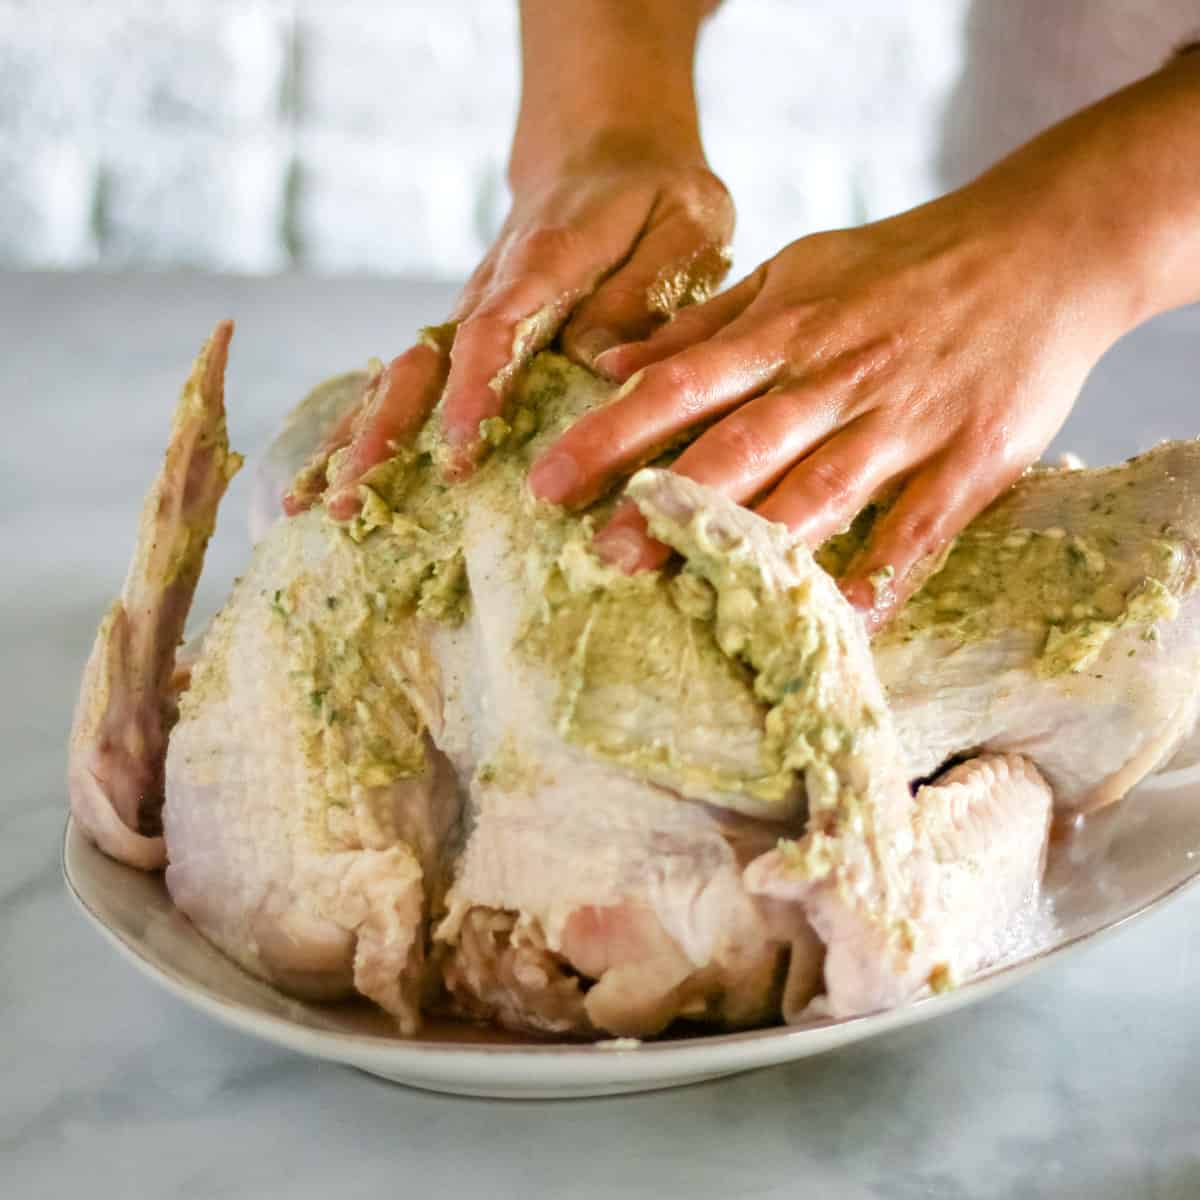 Rubbing the garlic herb butter onto the turkey skin.